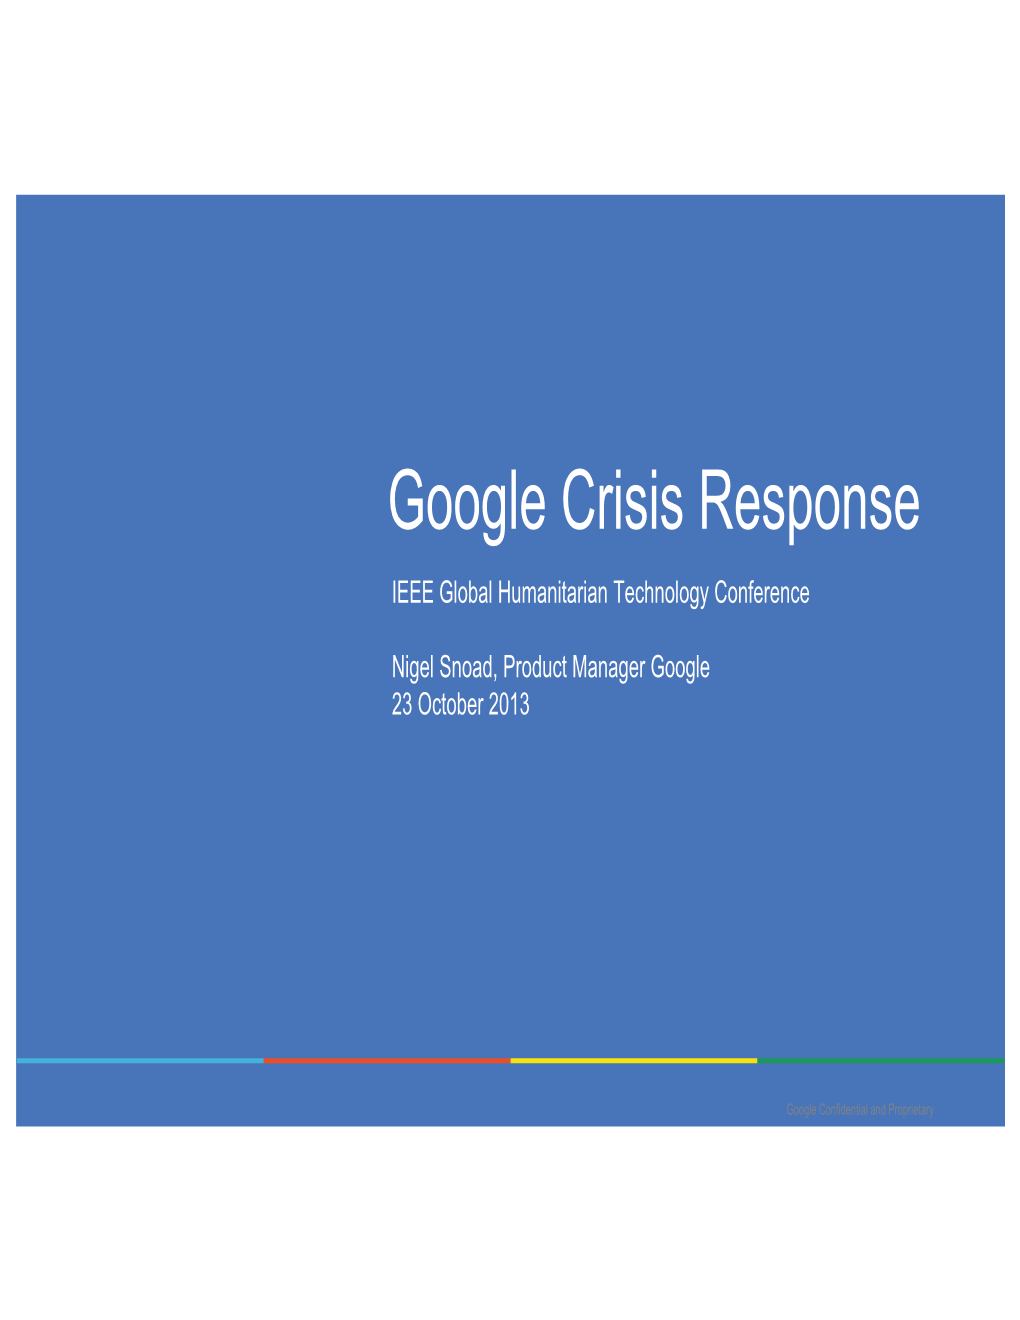 Google Crisis Response